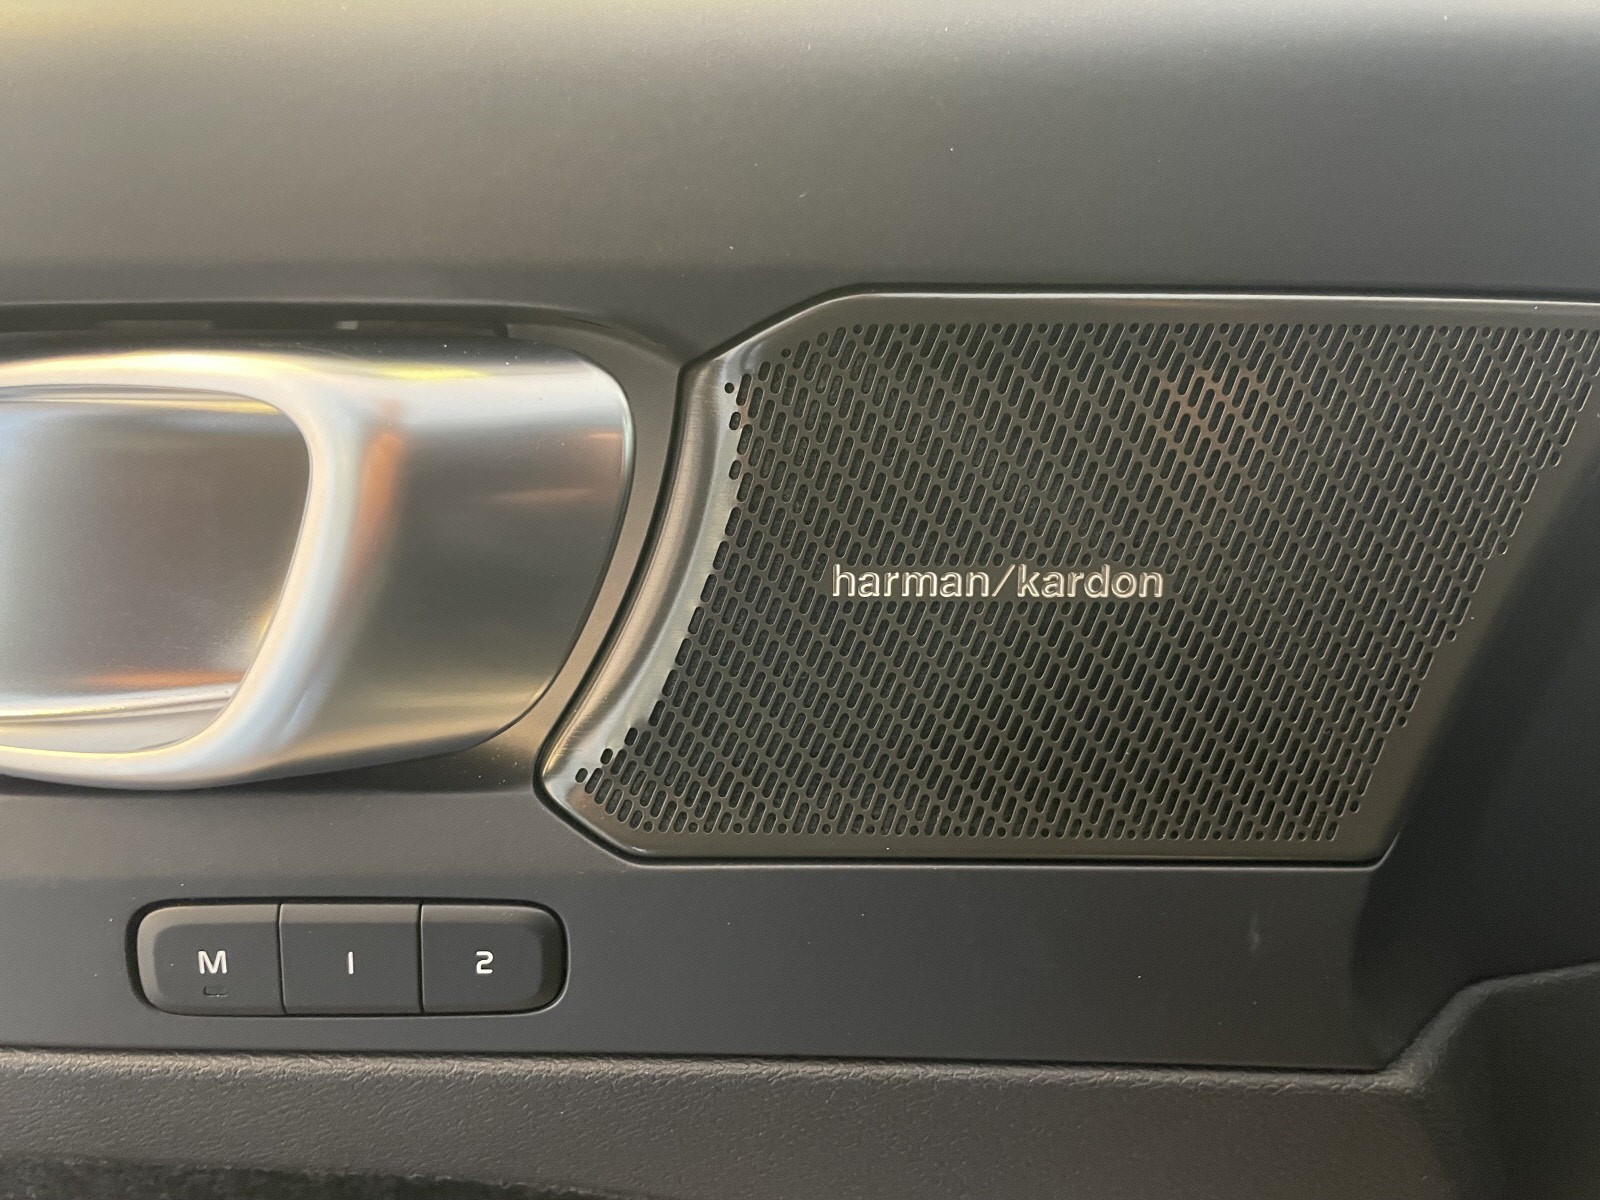 Harman Kardon stereo